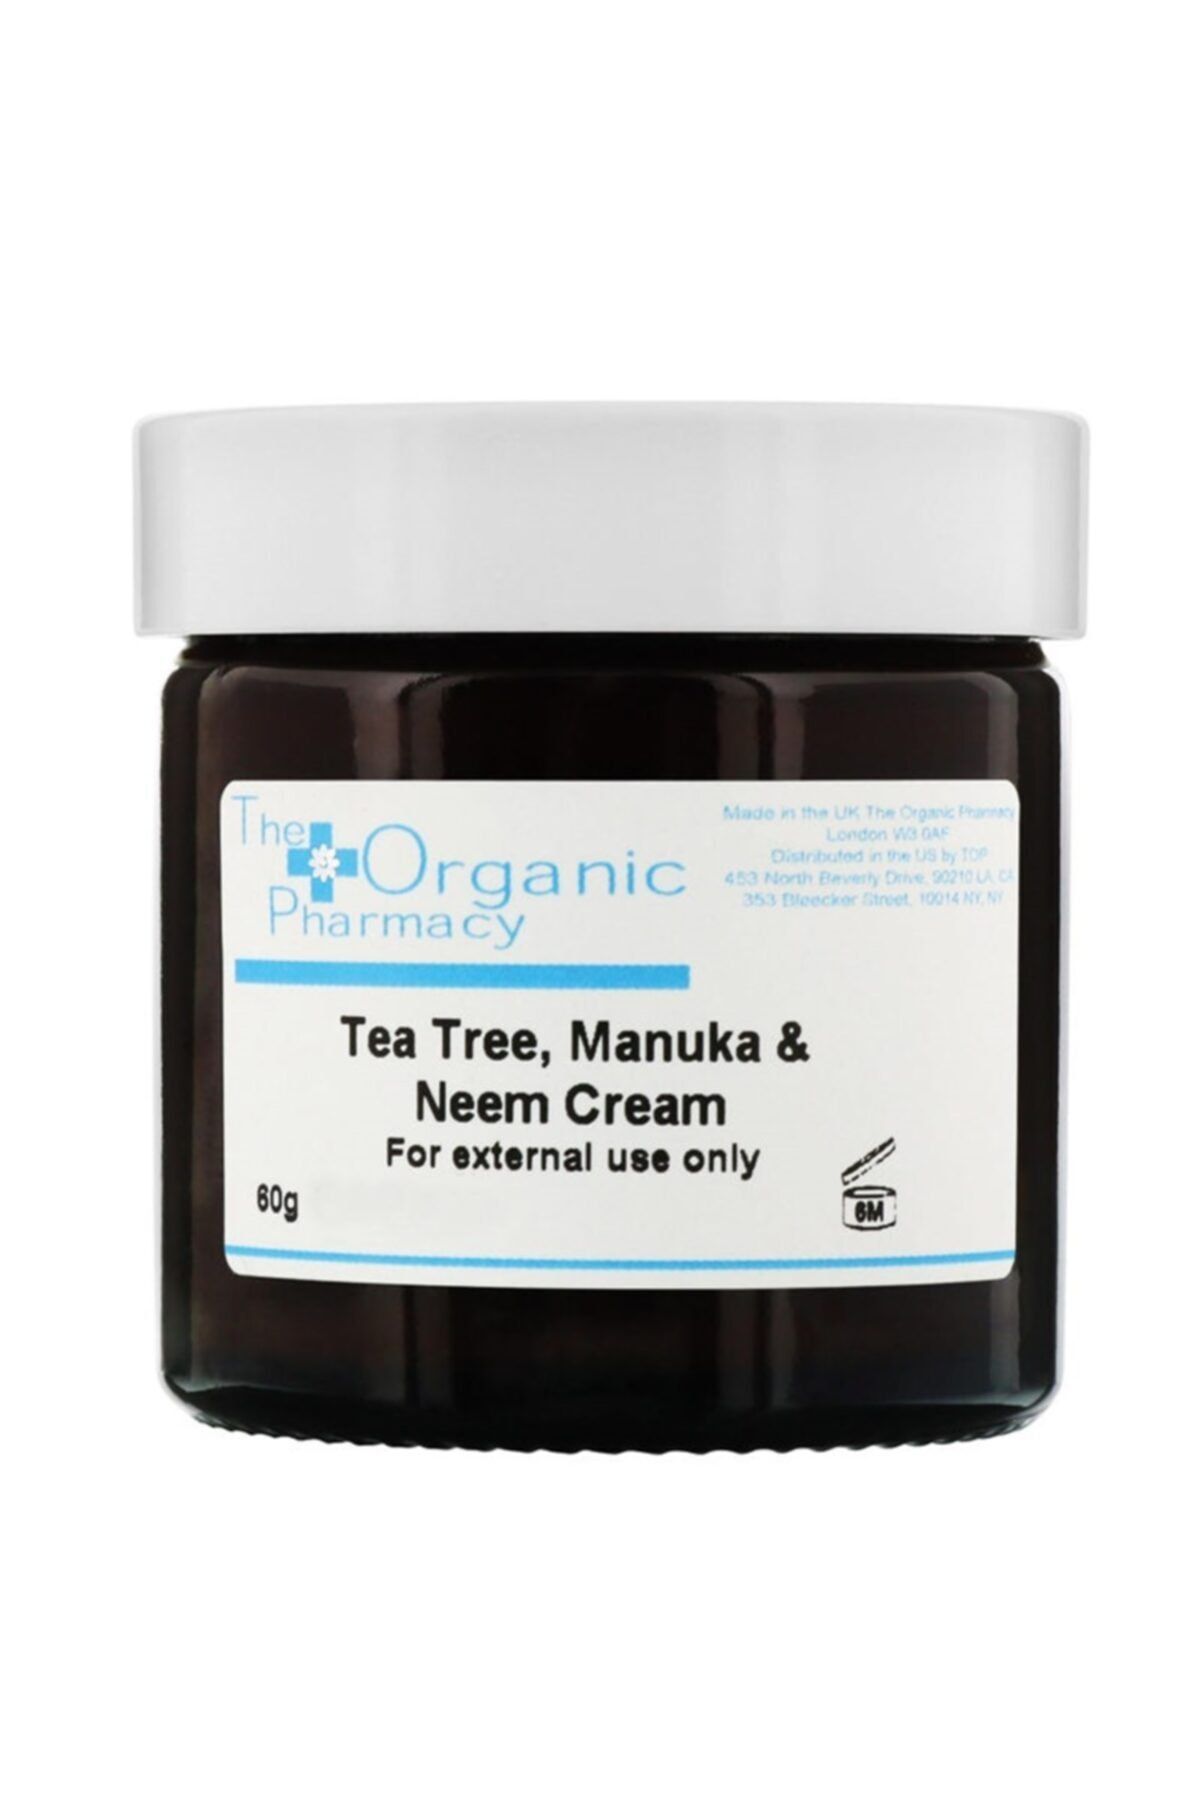 Genel Markalar Organic Pharmacy Tea Tree Manuka & Neem Cream 60g